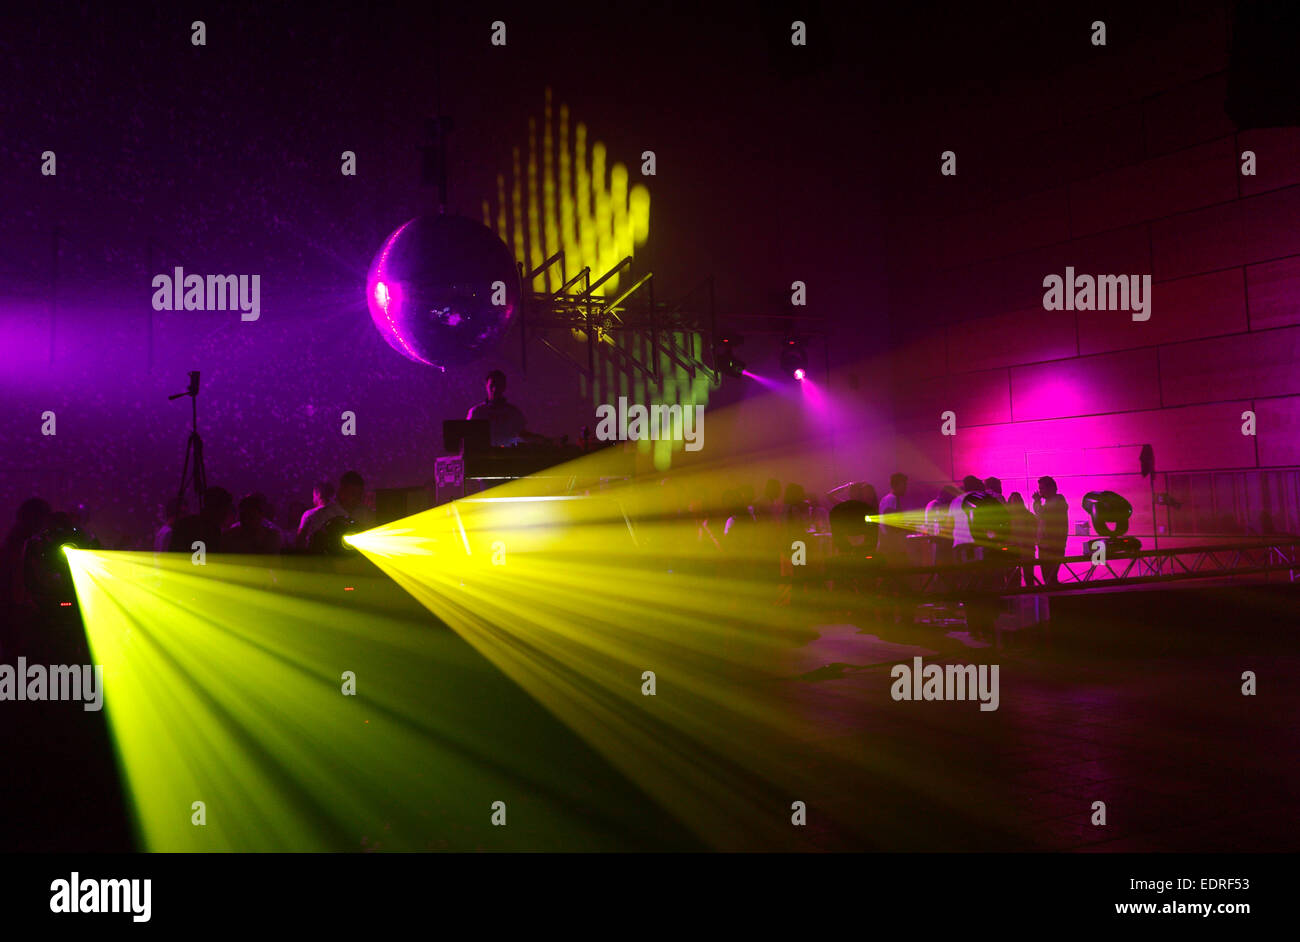 Disco lights, laser lights Stock Photo